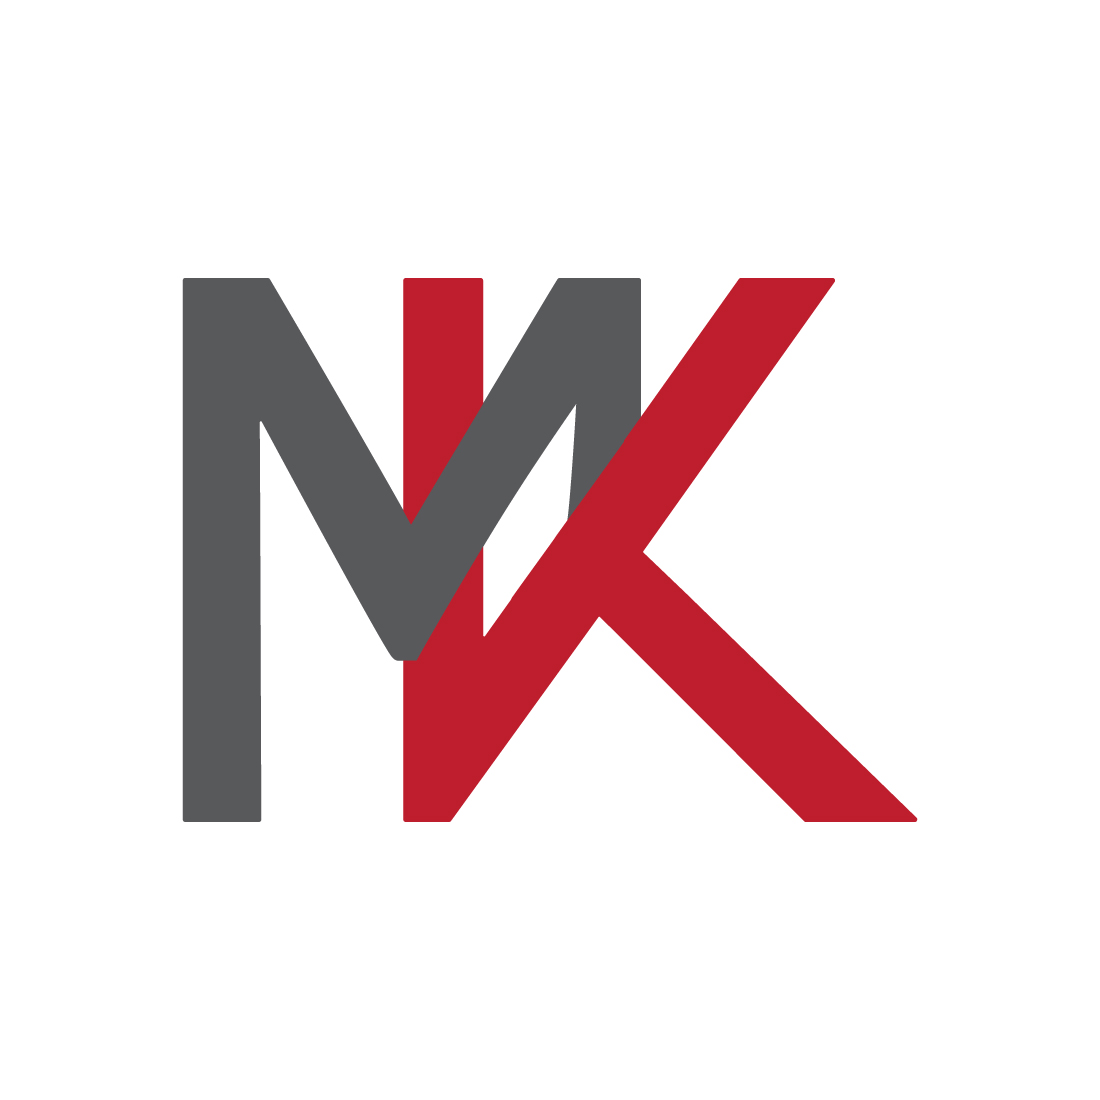 Professional MK letters logo design MK logo red and black color best icon KM logo monogram design preview image.